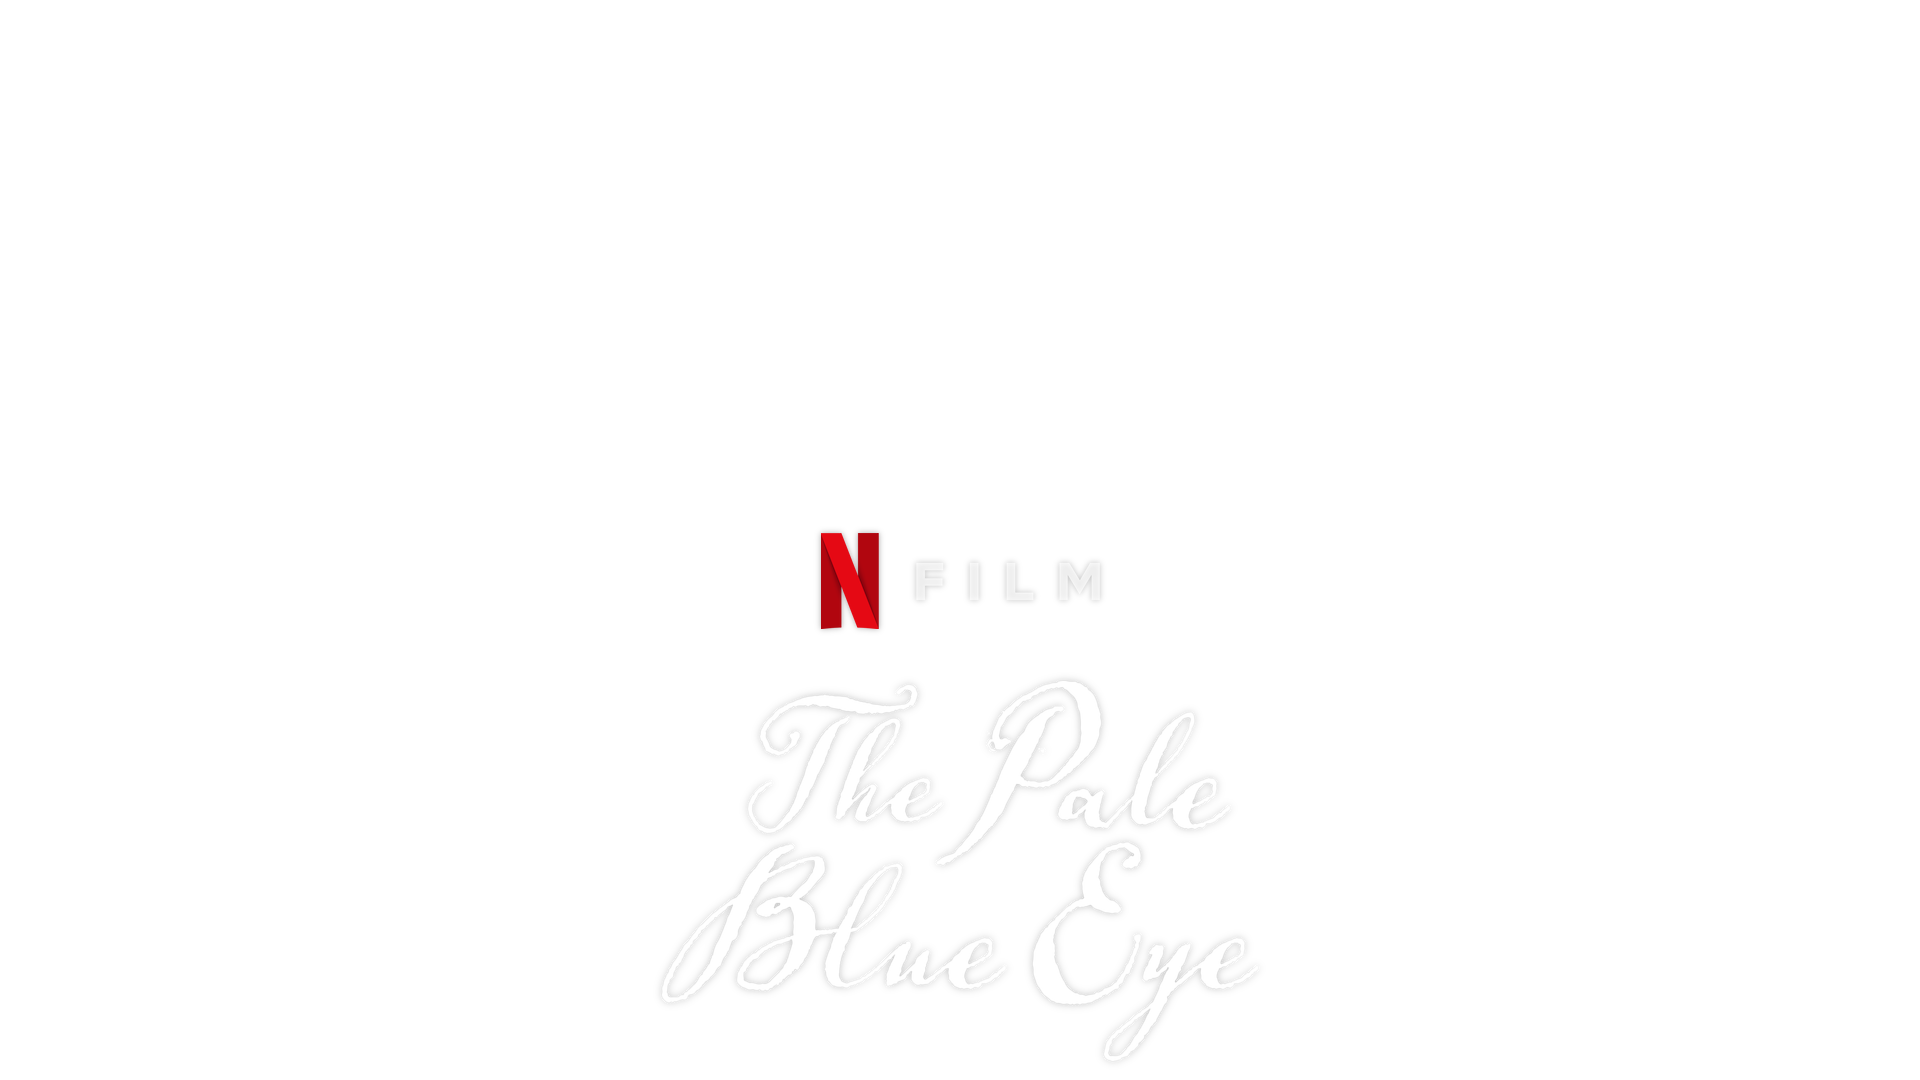 Watch The Pale Blue Eye